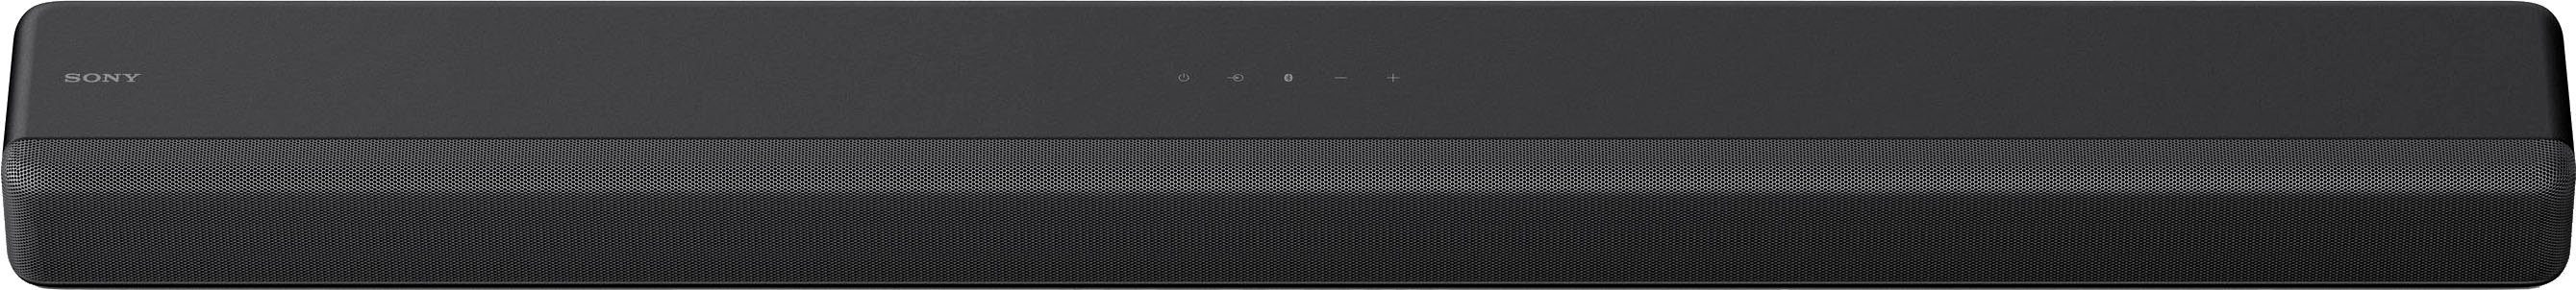 3.1 Subwoofer, Dolby W, Sony mit 400 Atmos) HT-G700 (Bluetooth, Soundbar